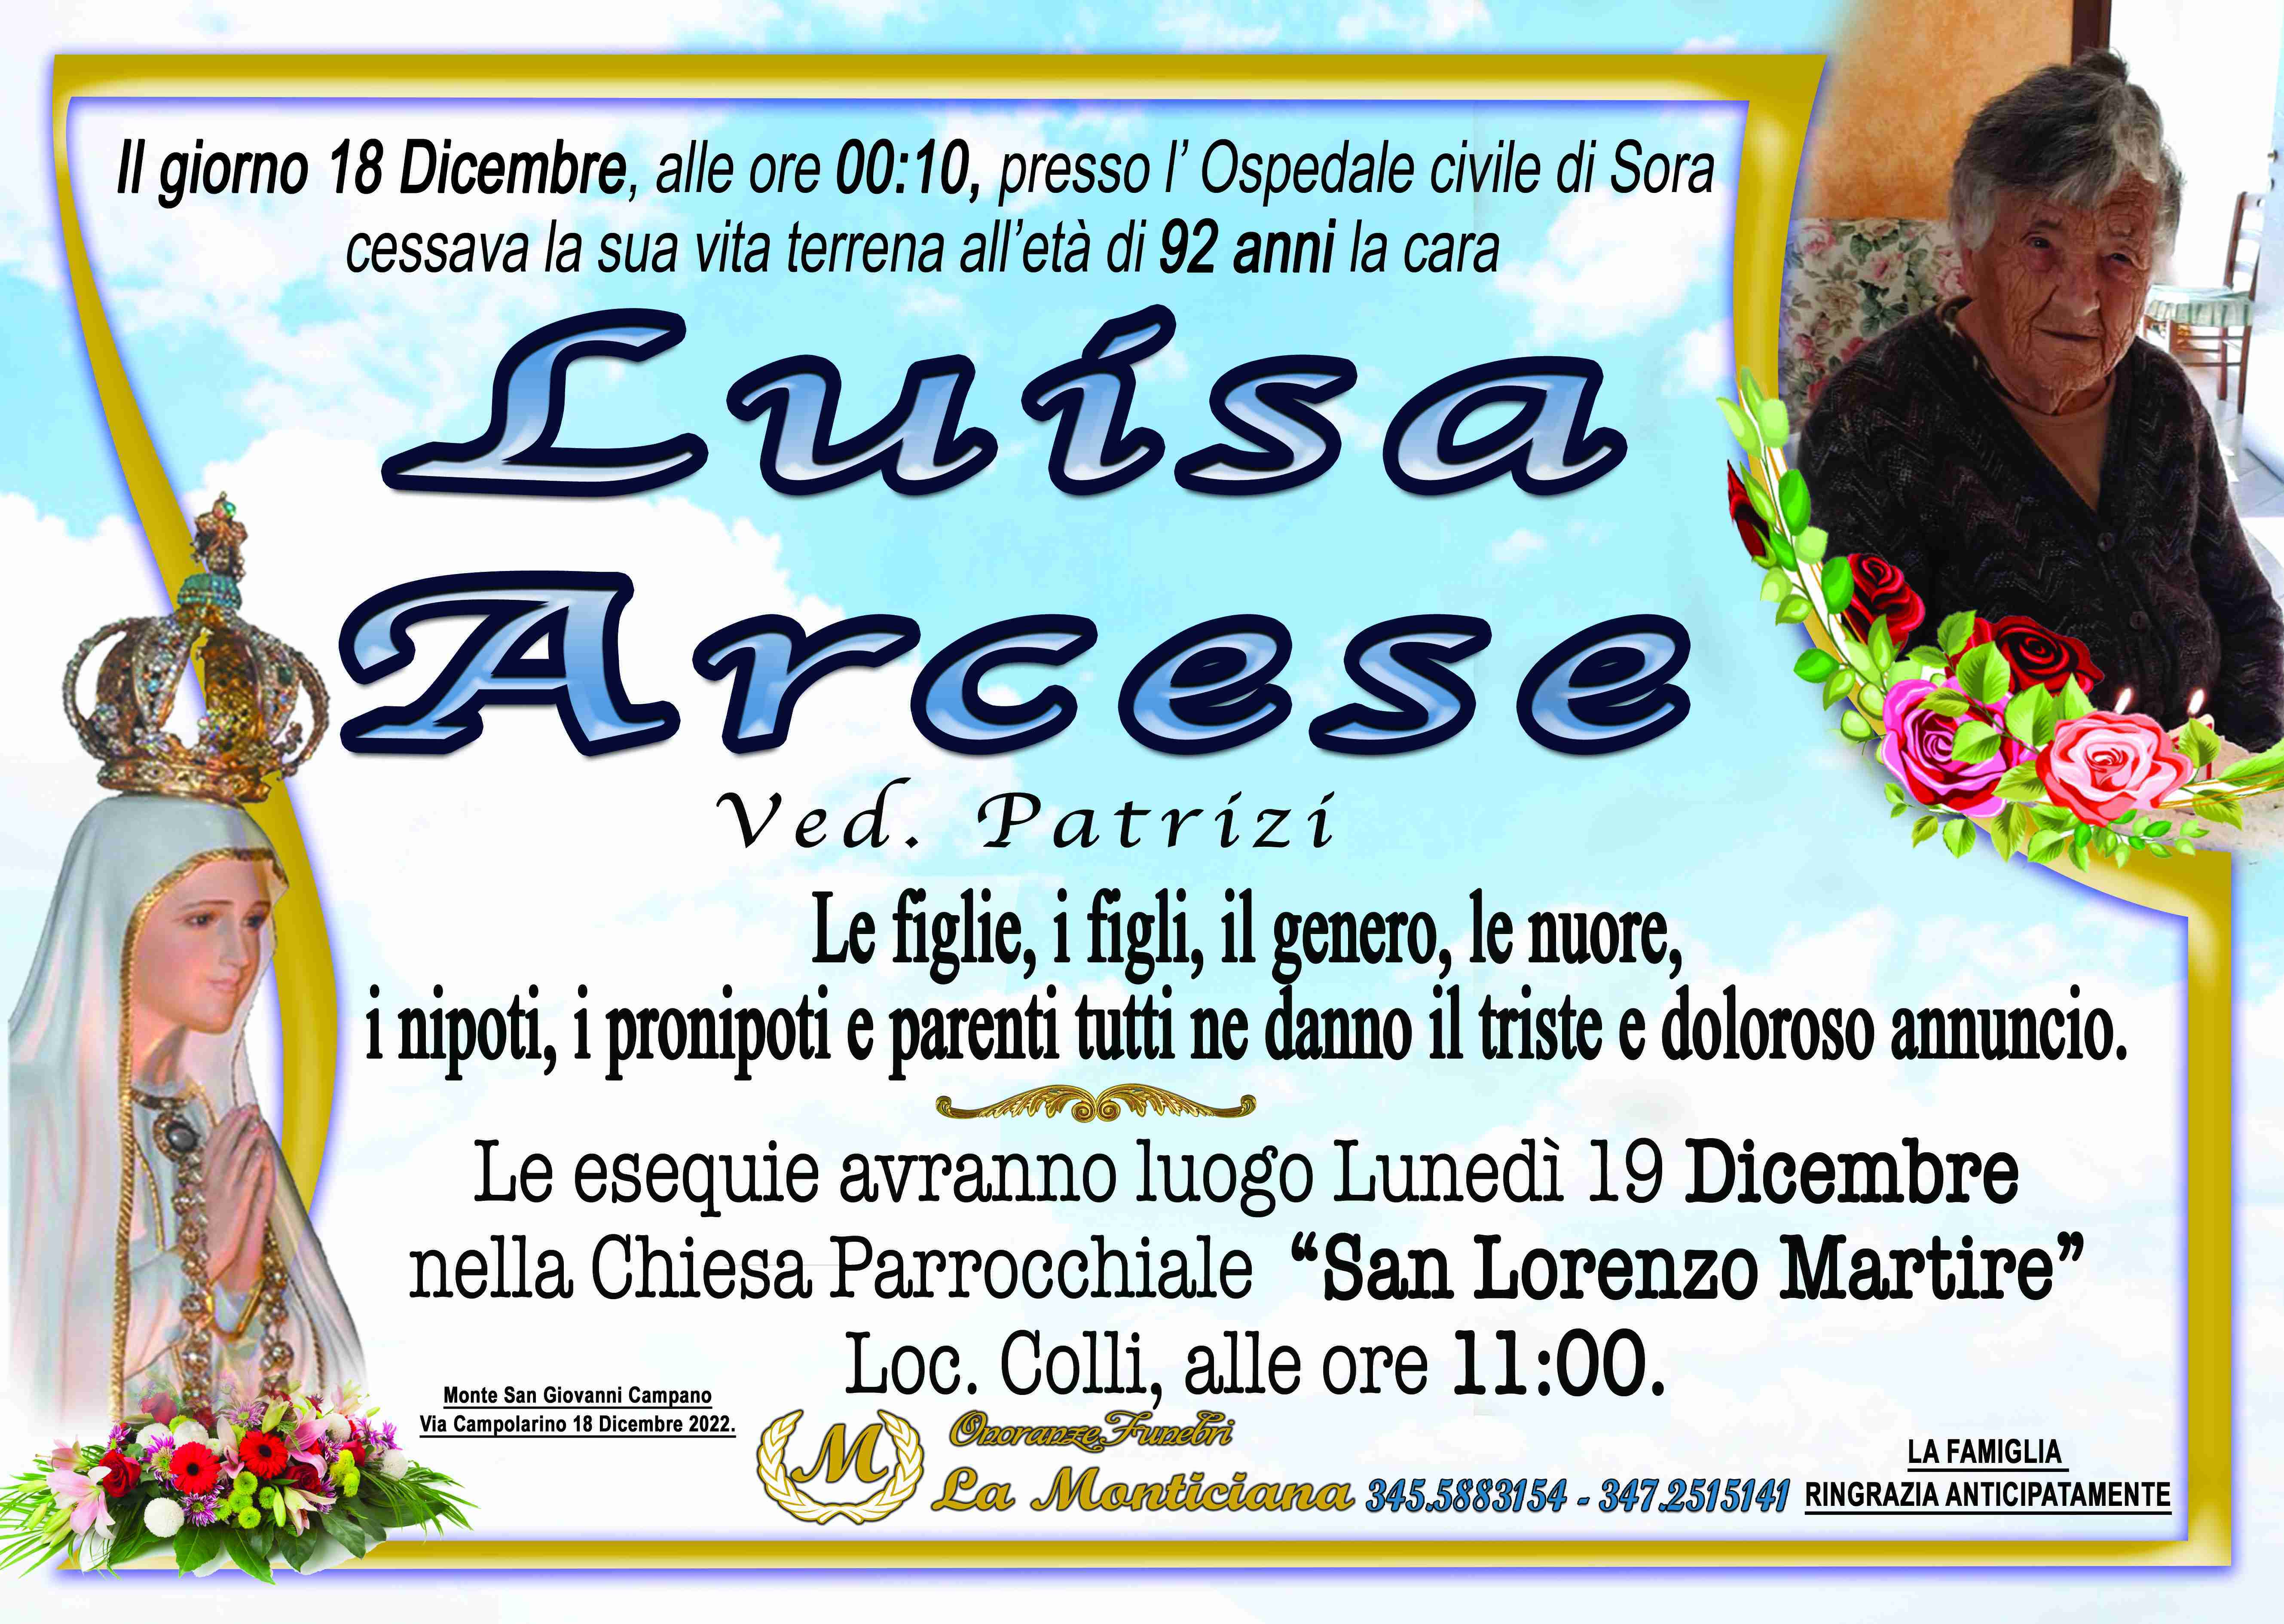 Luisa Arcese